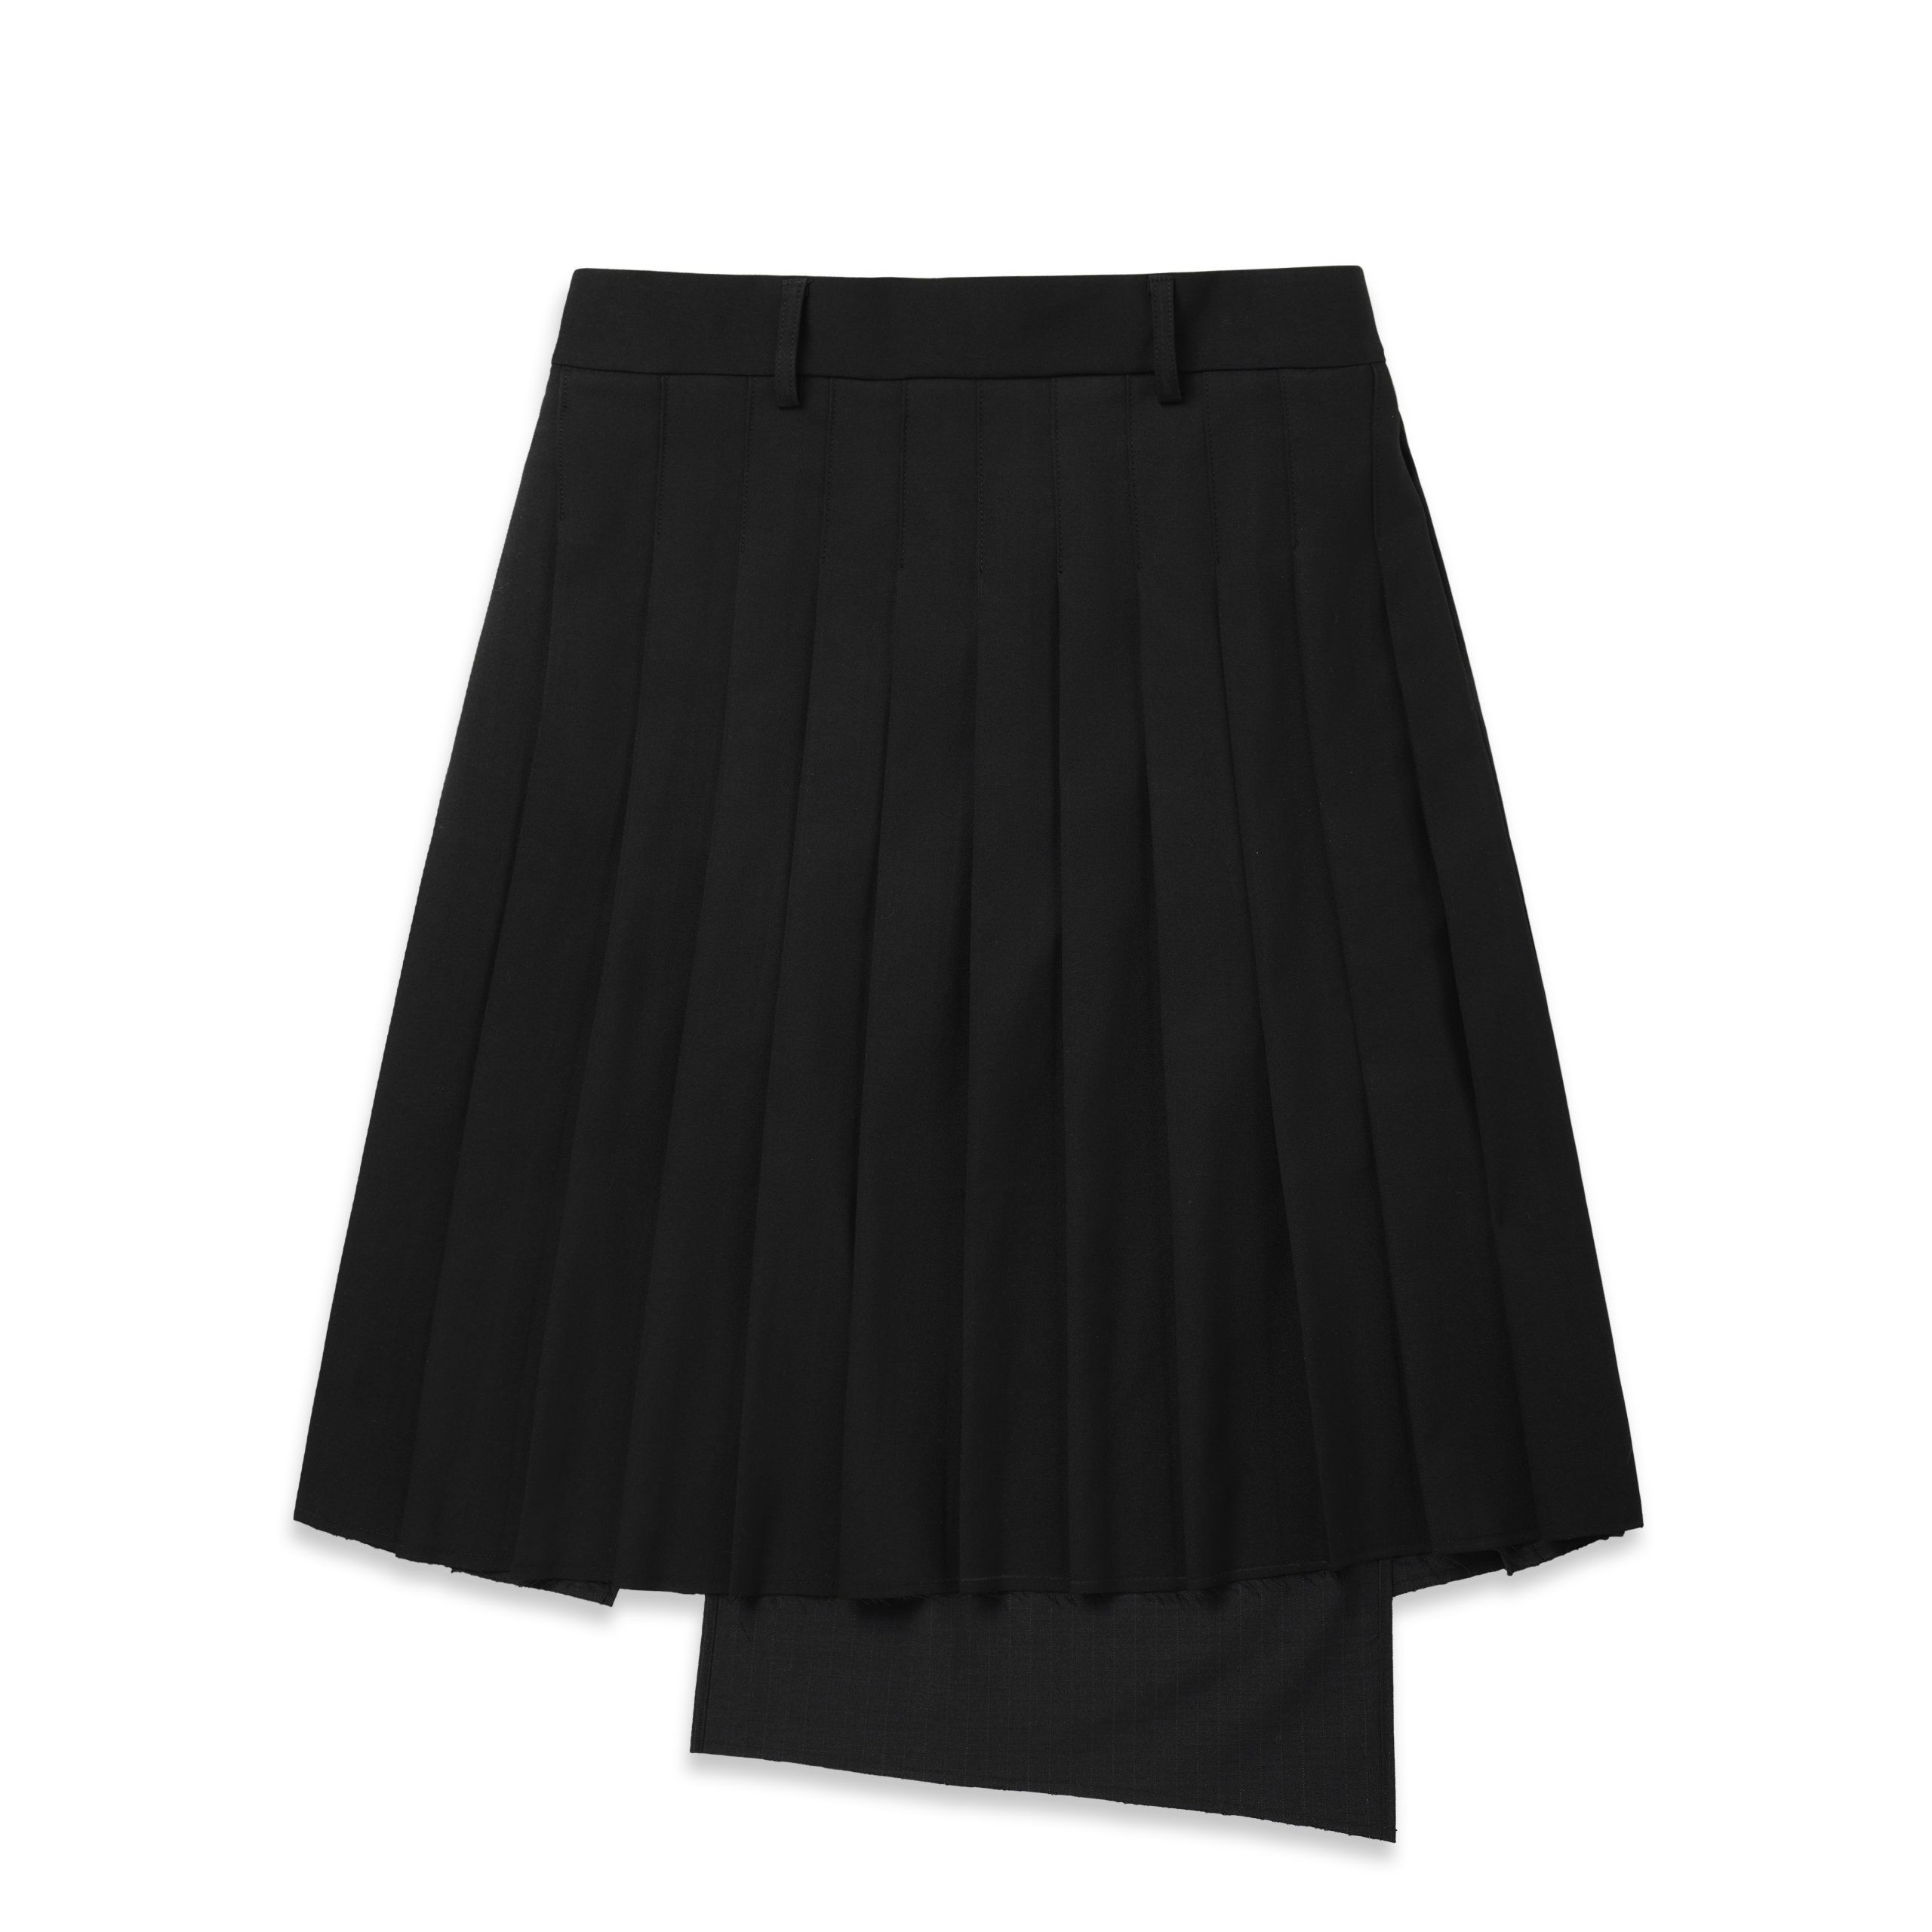 ALMOST 4LAYERS Black Skirt - RAKKIU